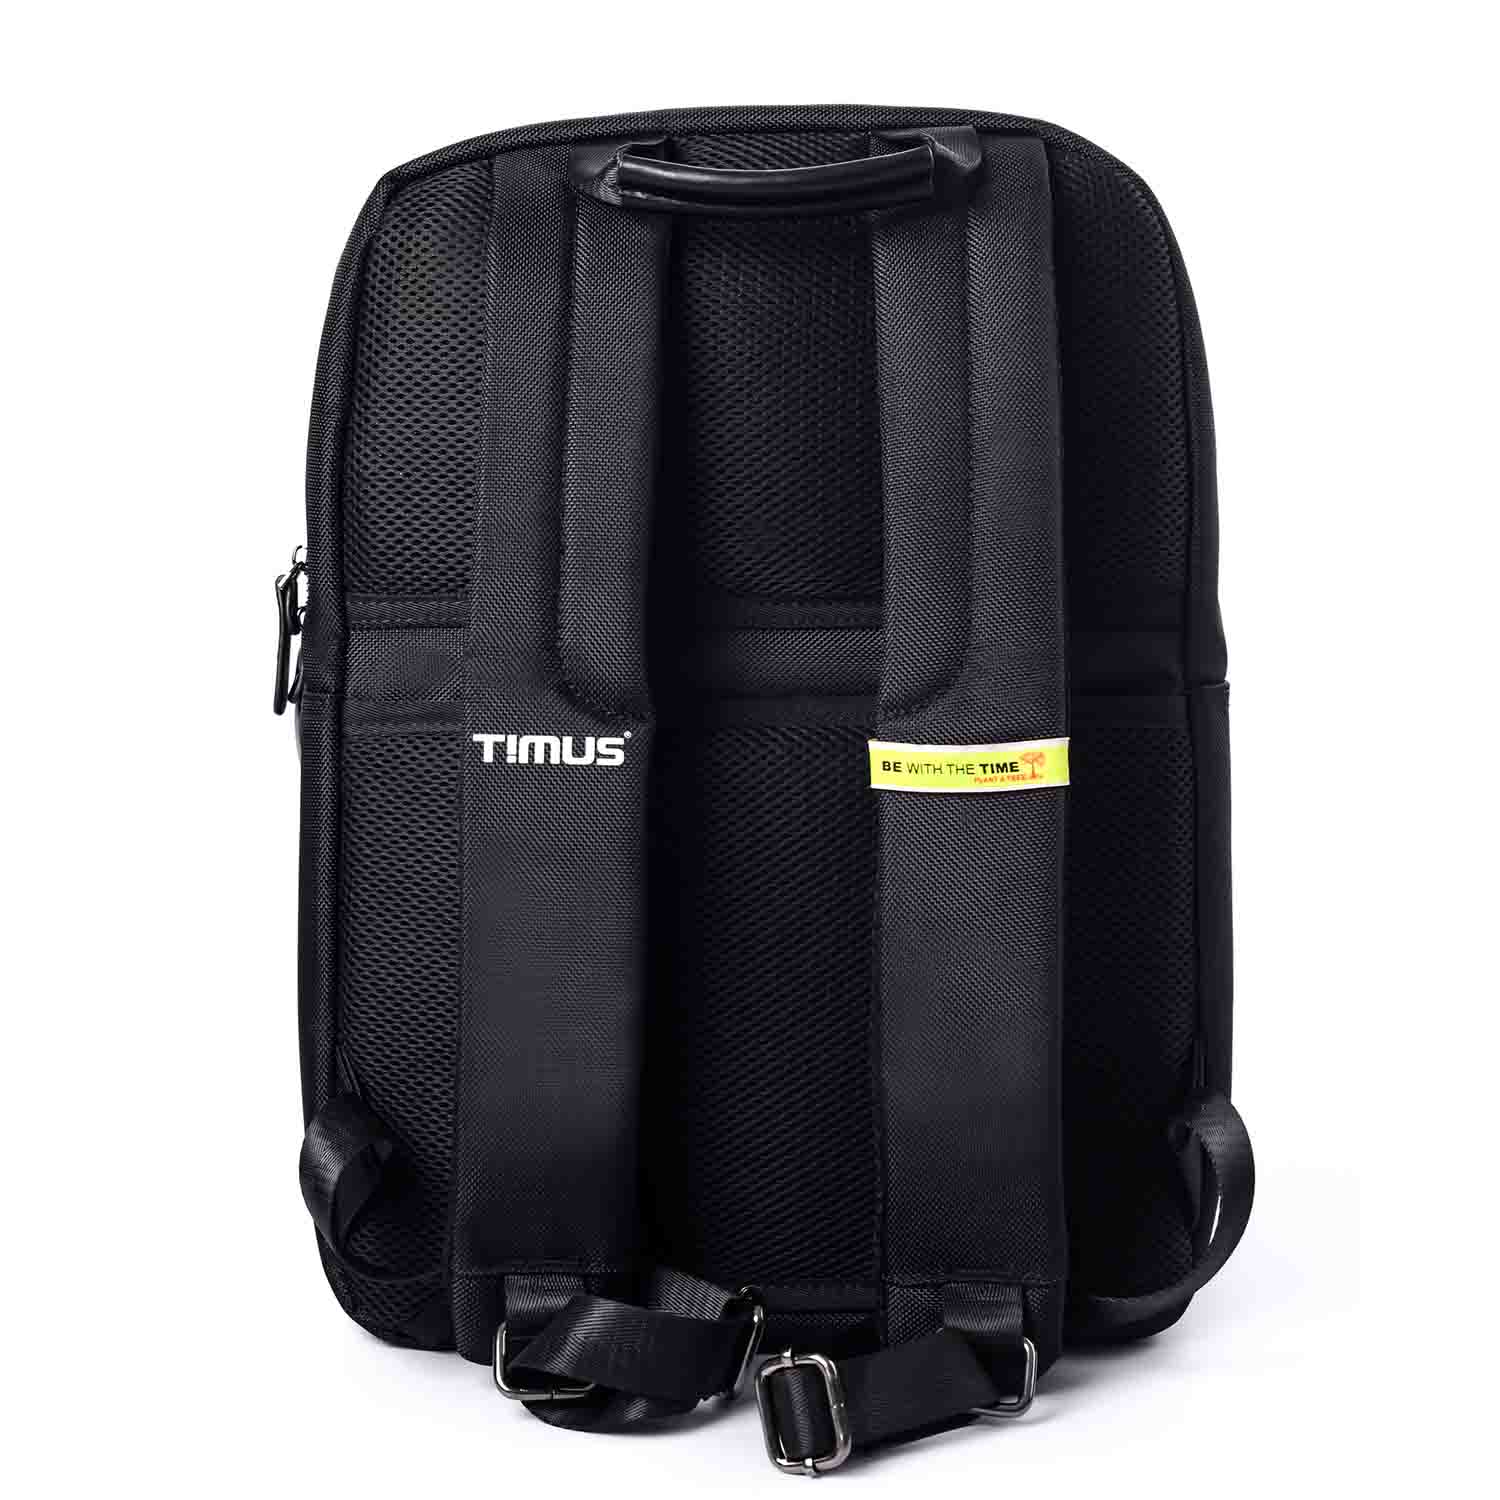 Timus-Lifestyle-backpacks-professional-laptop-backpack-oslo-oslo-laptop-backpack-4